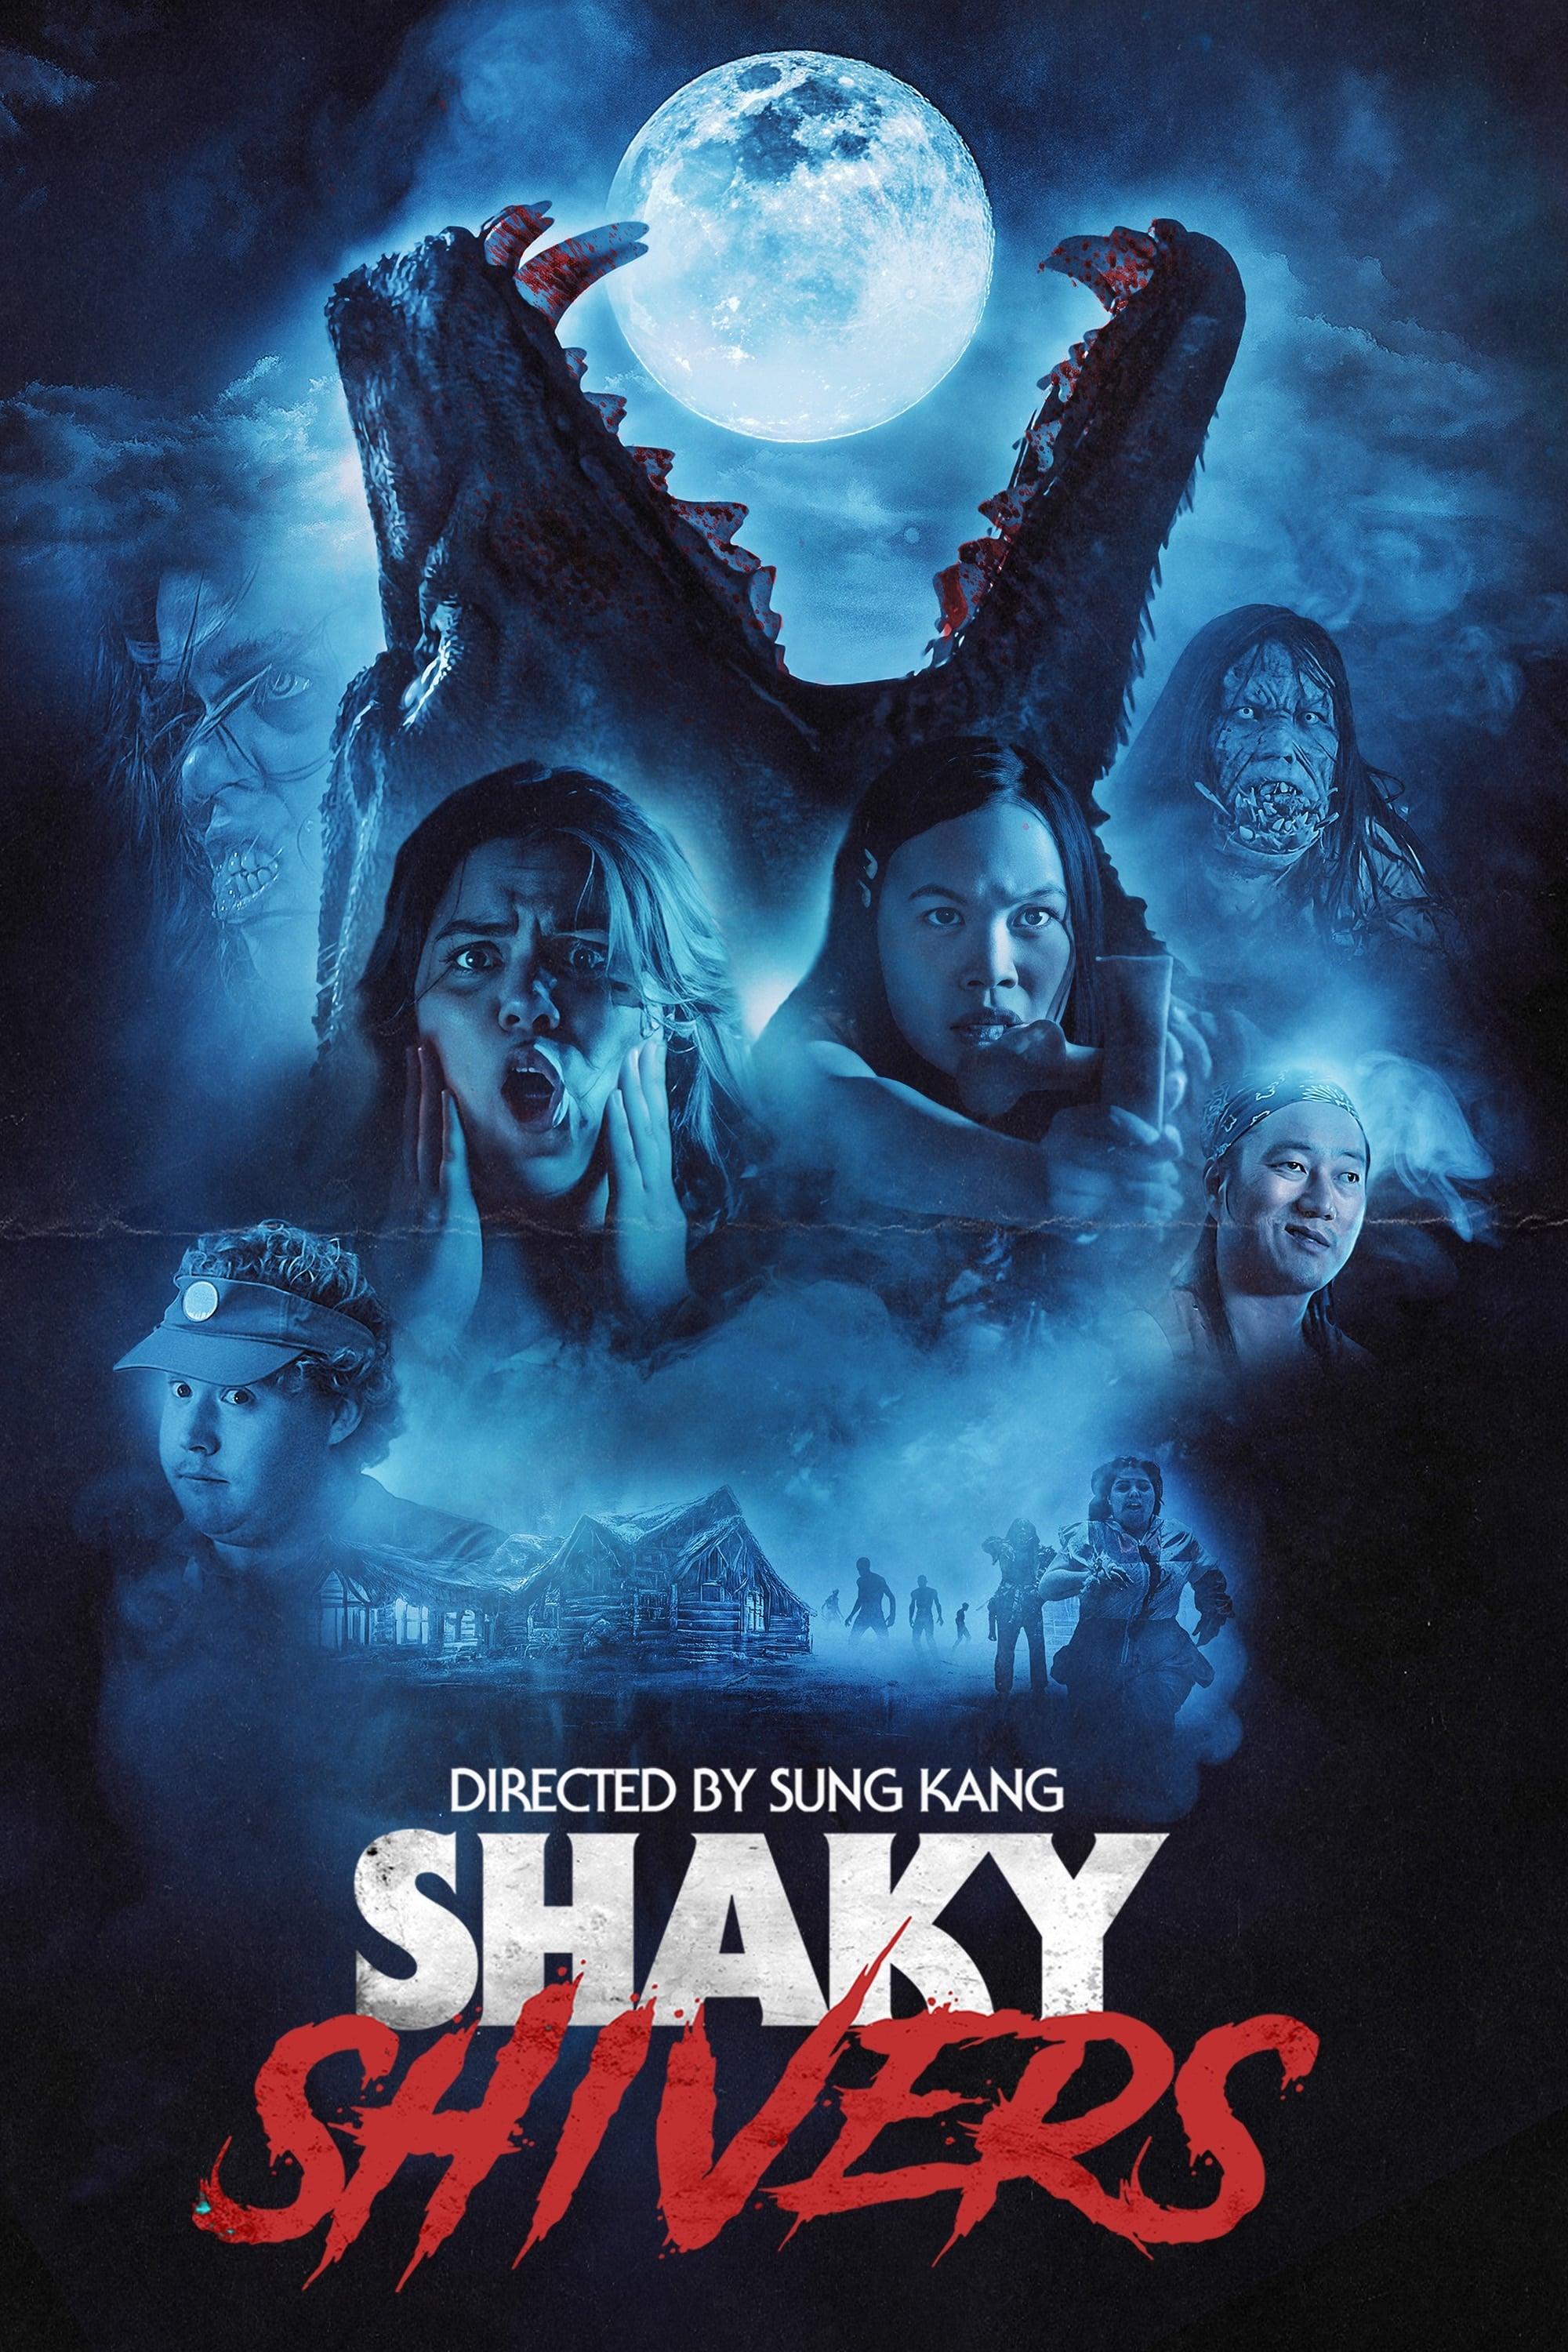 Shaky Shivers poster